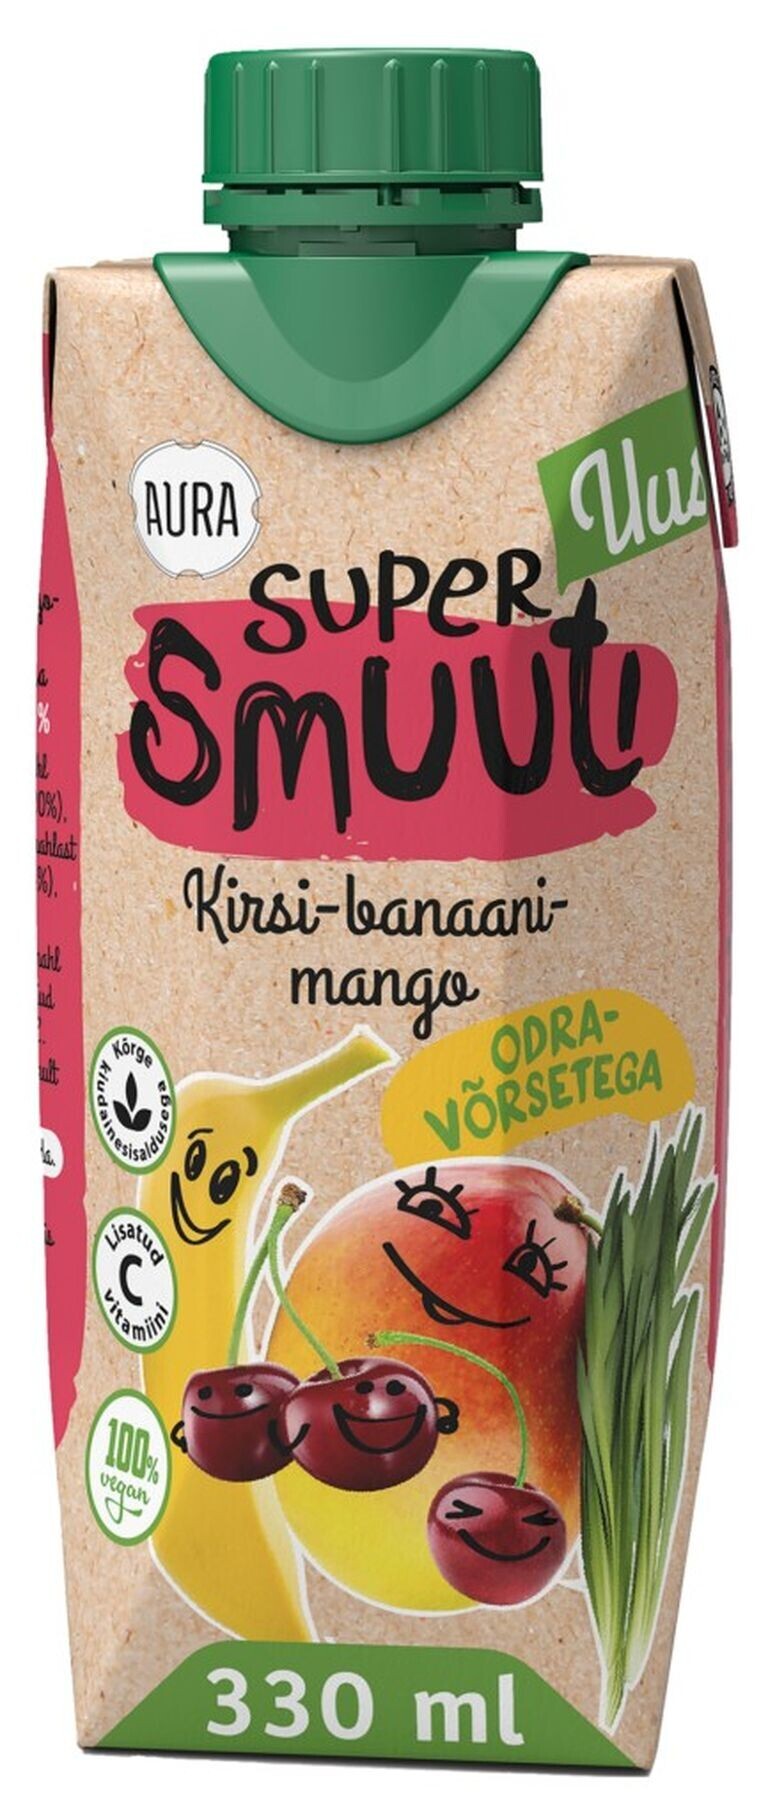 A.Le Coqi Aura kirsi-banaani-mango supersmuuti odravõrsetega